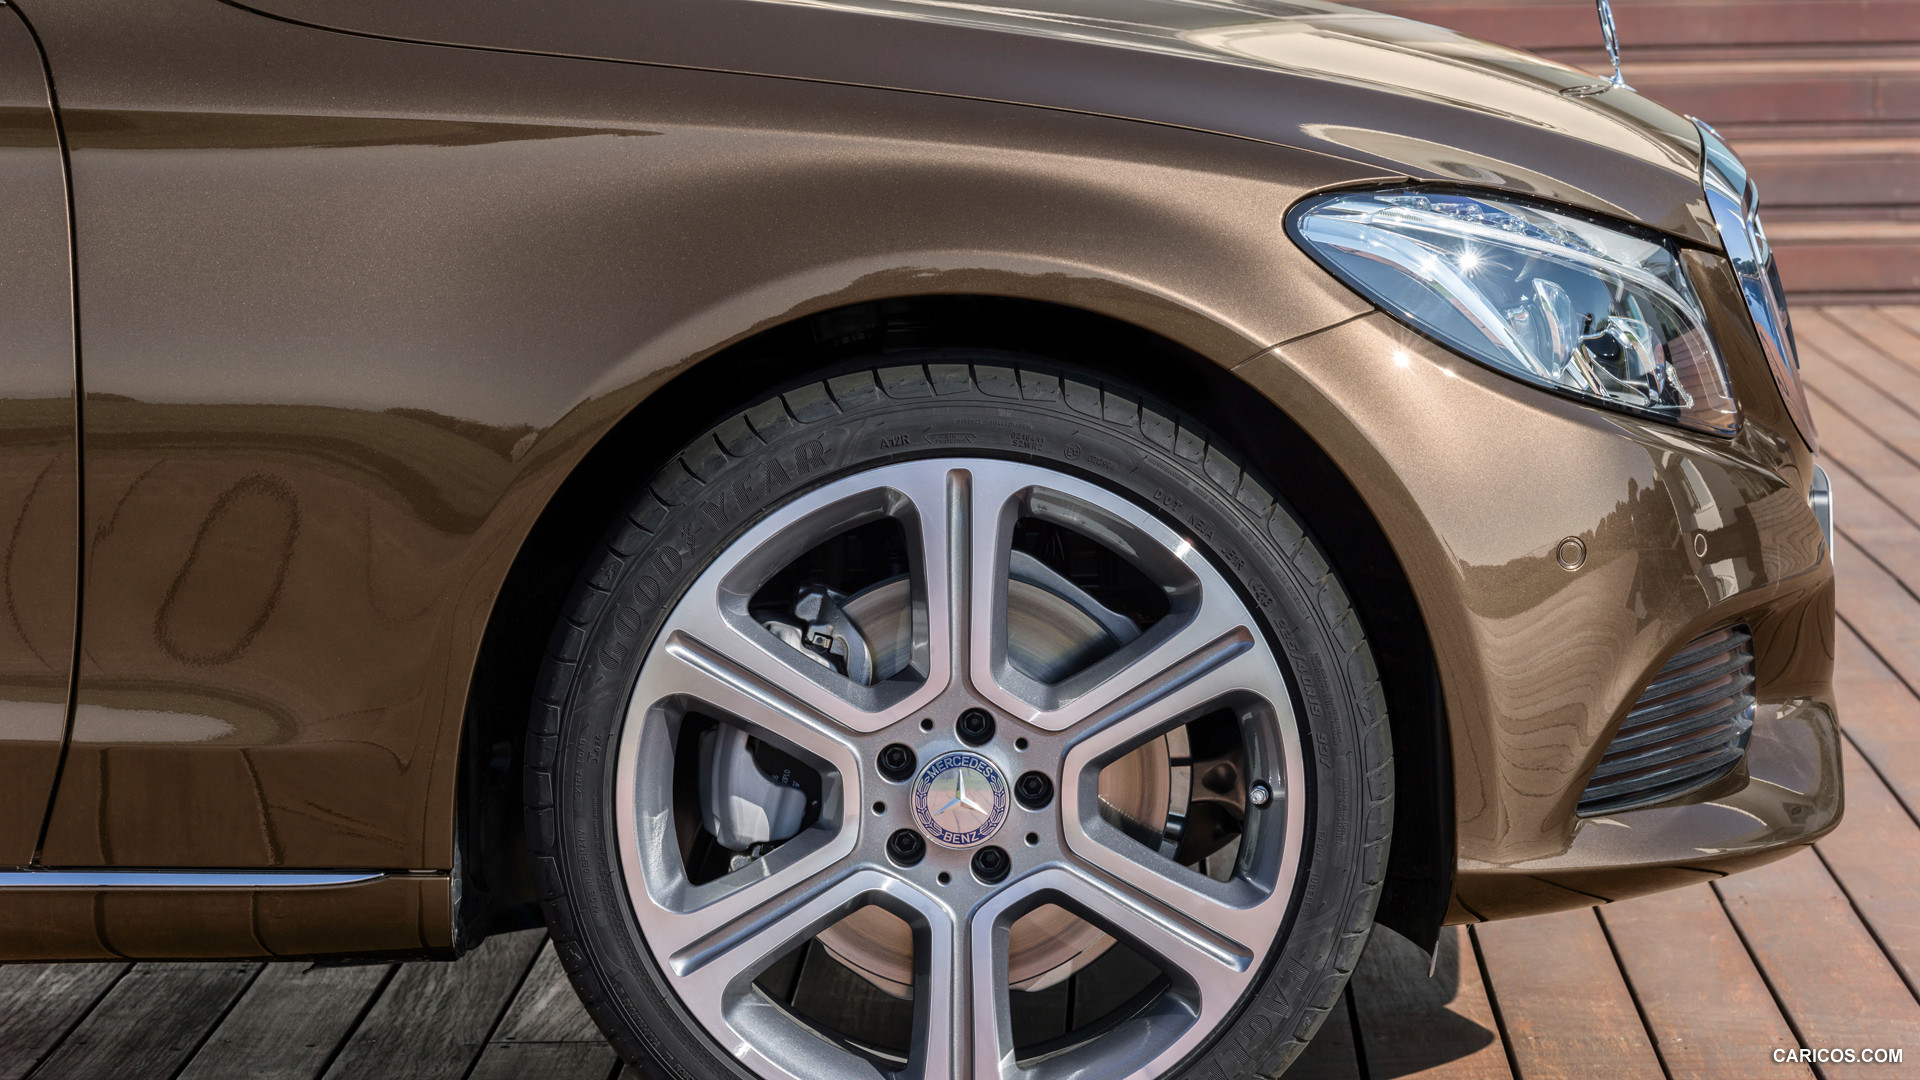 2015 Mercedes-Benz C-Class Estate C300 BlueTEC HYBRID (EXCLUSIV Luxury package) - Wheel, #78 of 173